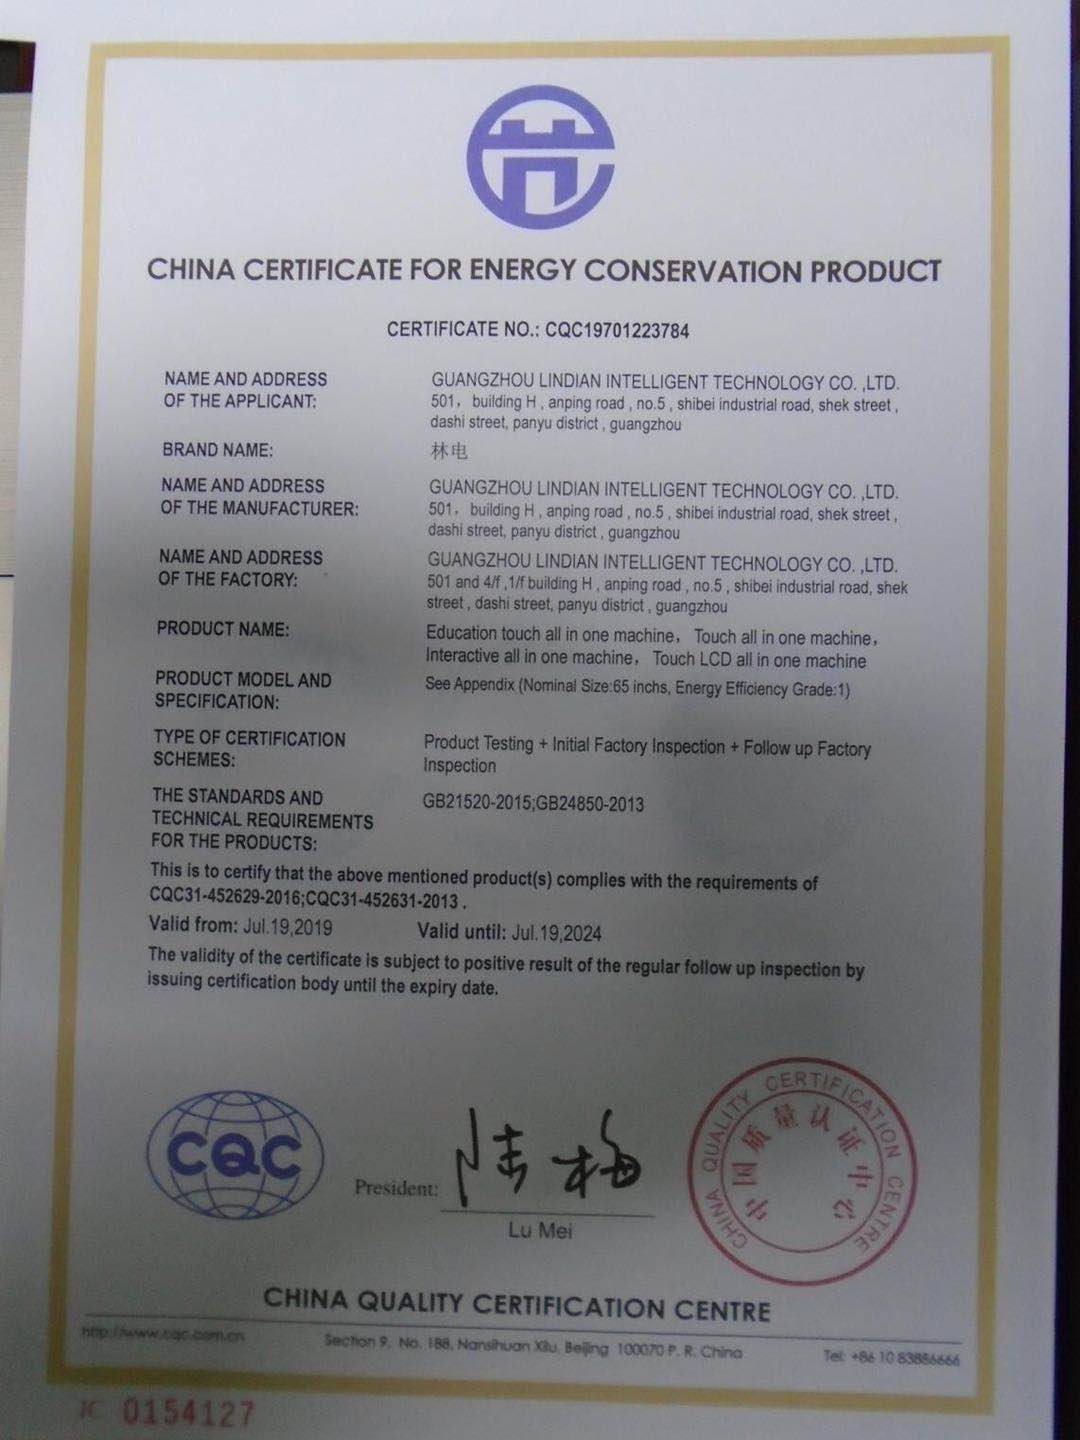 sertifikaat (4)